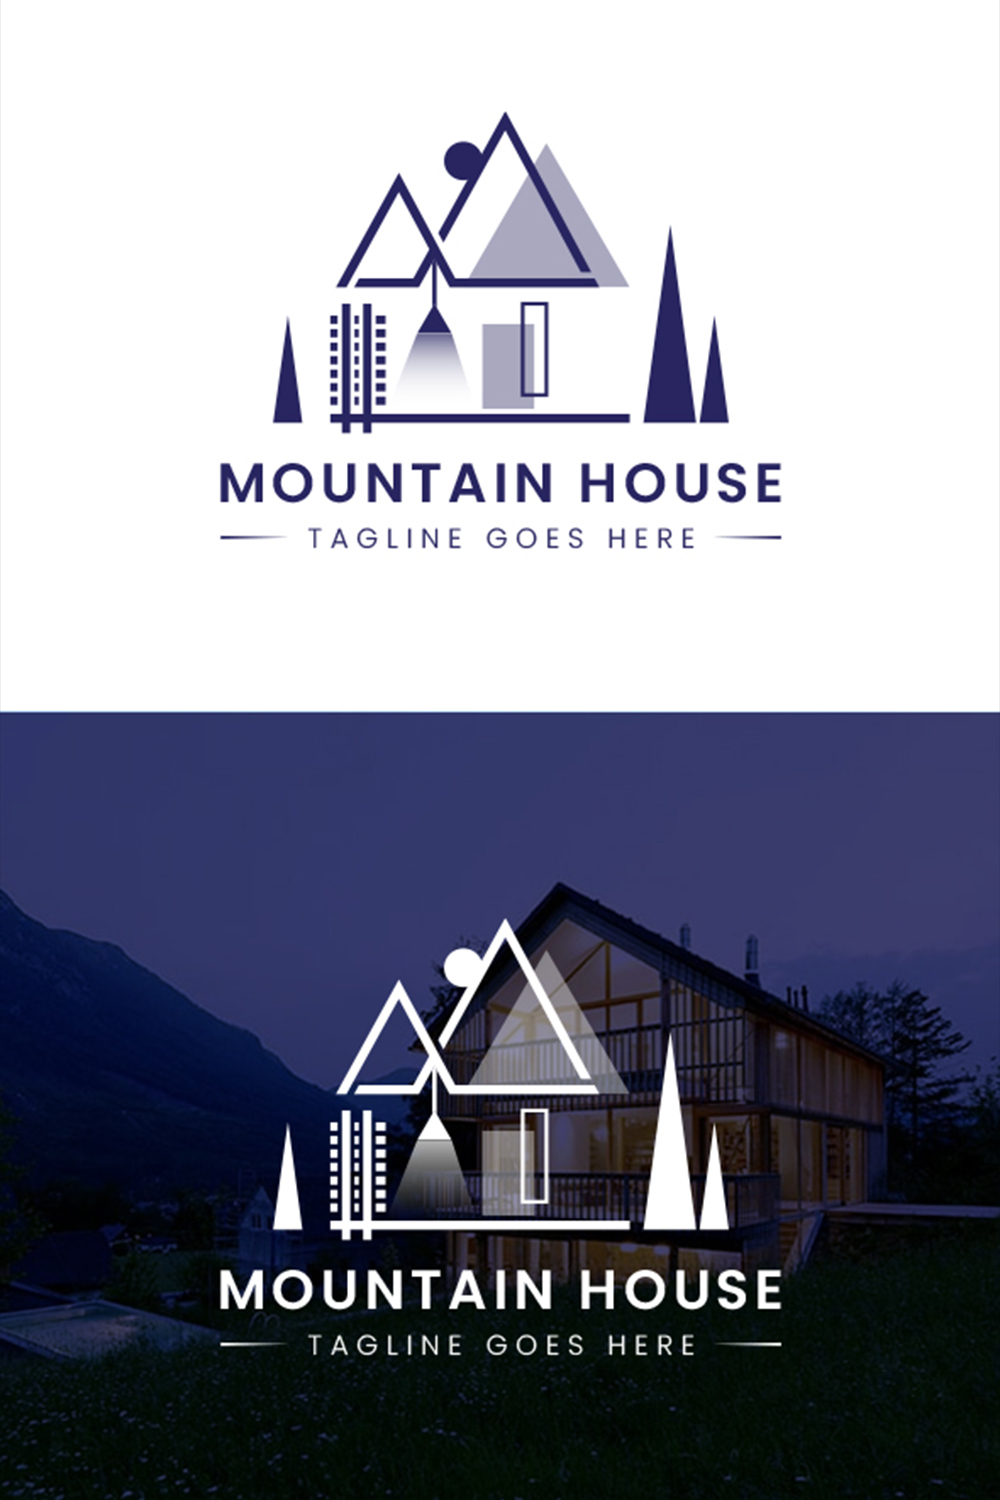 Mountain house logo pinterest preview image.